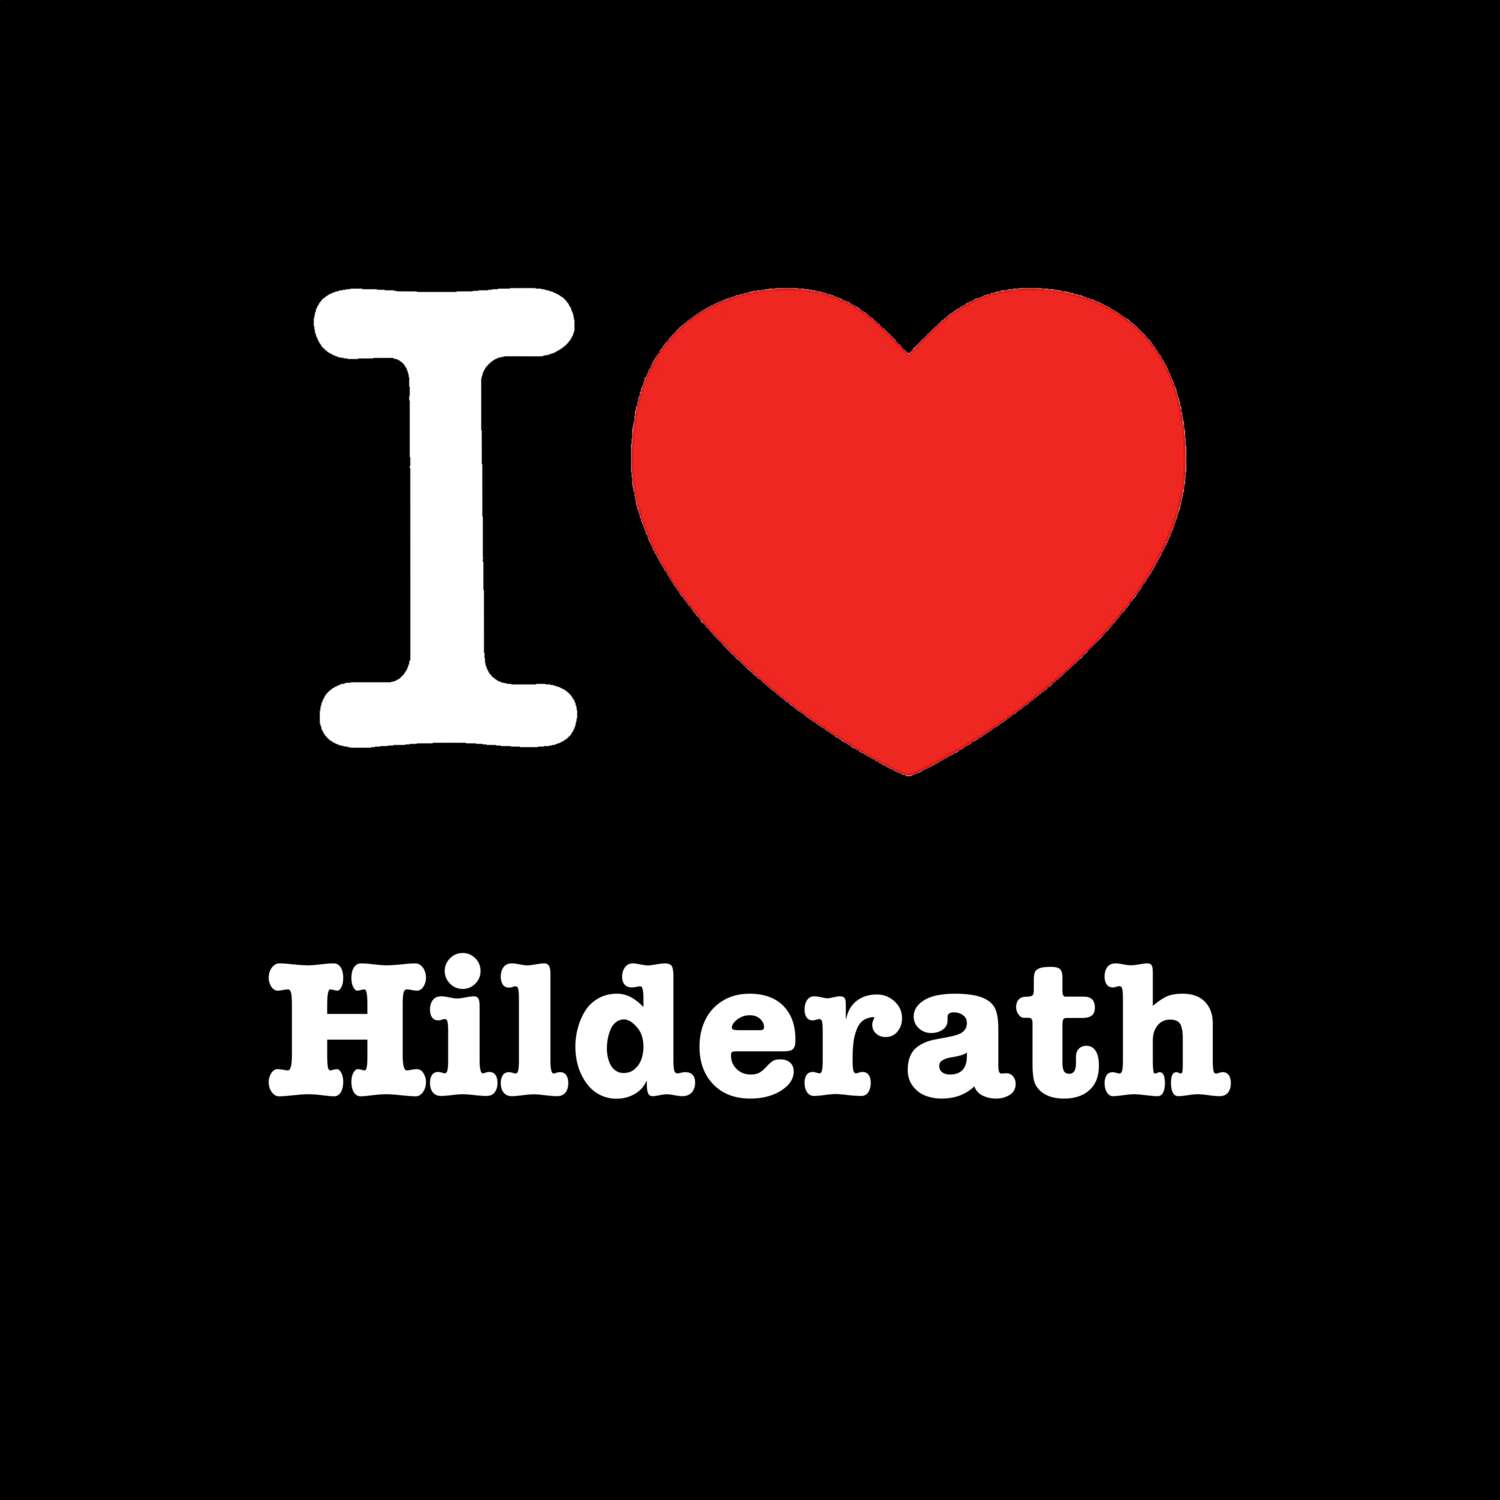 Hilderath T-Shirt »I love«